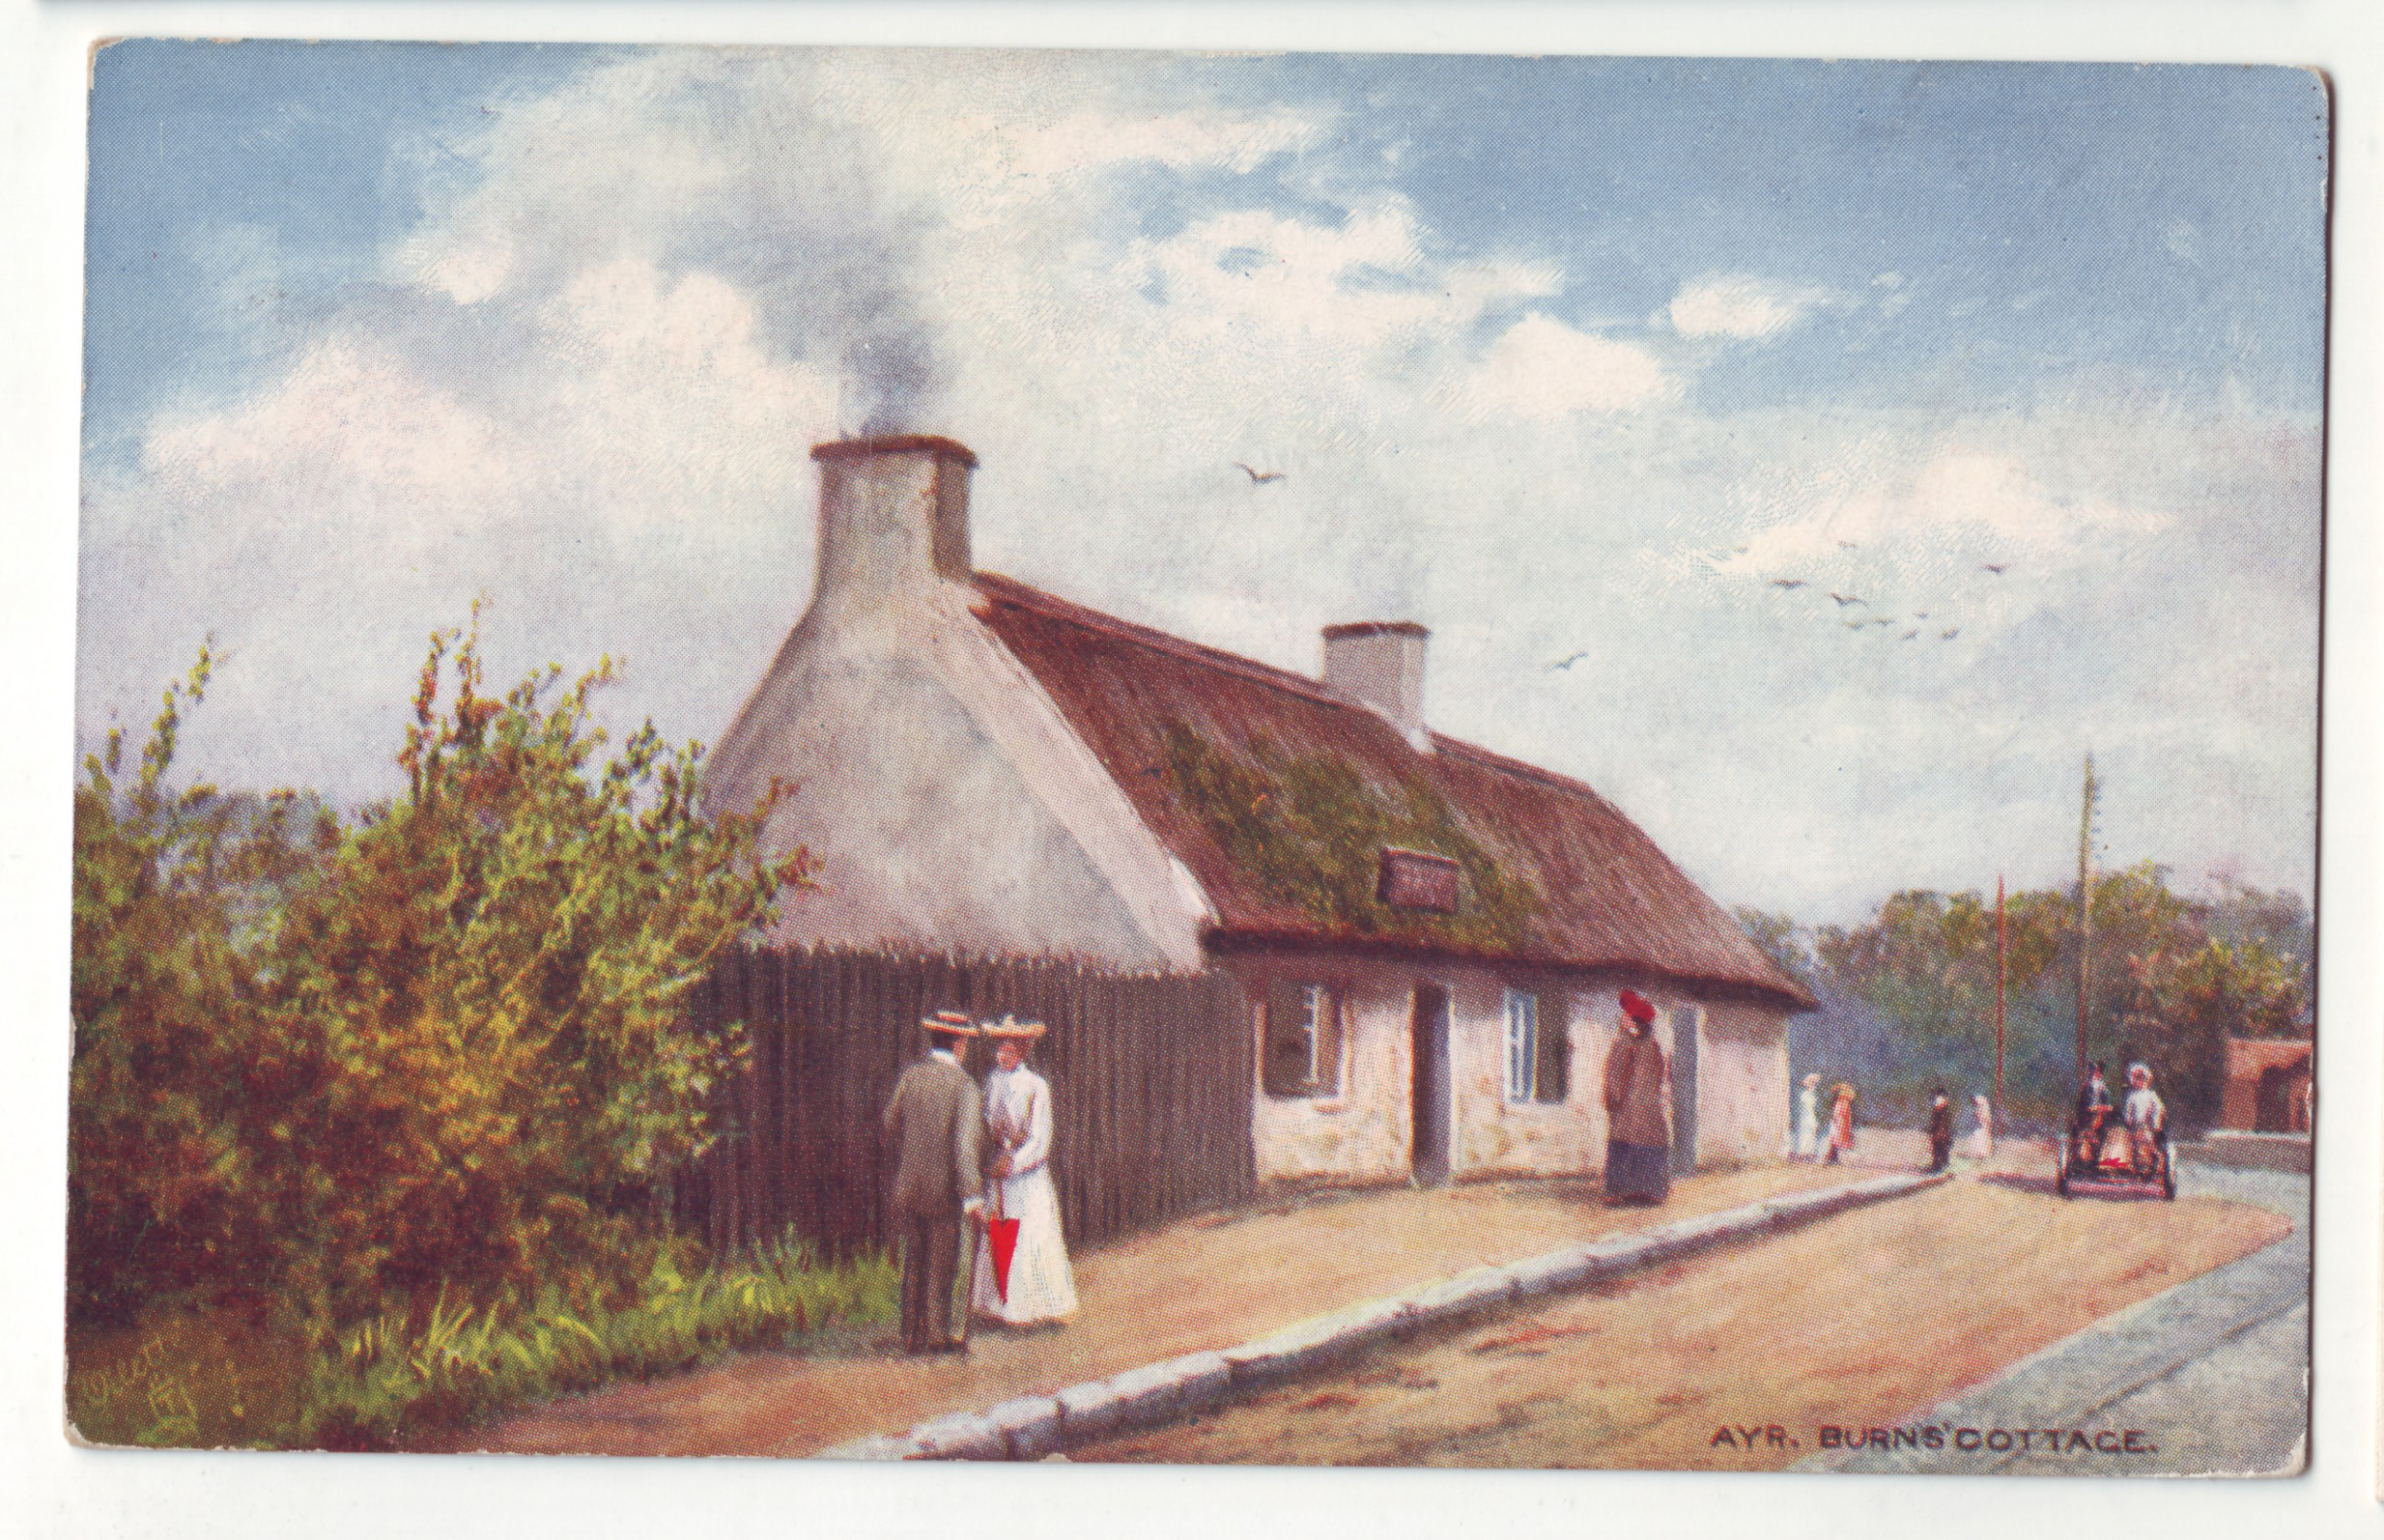 P435 Jl Tucks Postcard Ayr Burn S Cottage Birthplace Robert Burns